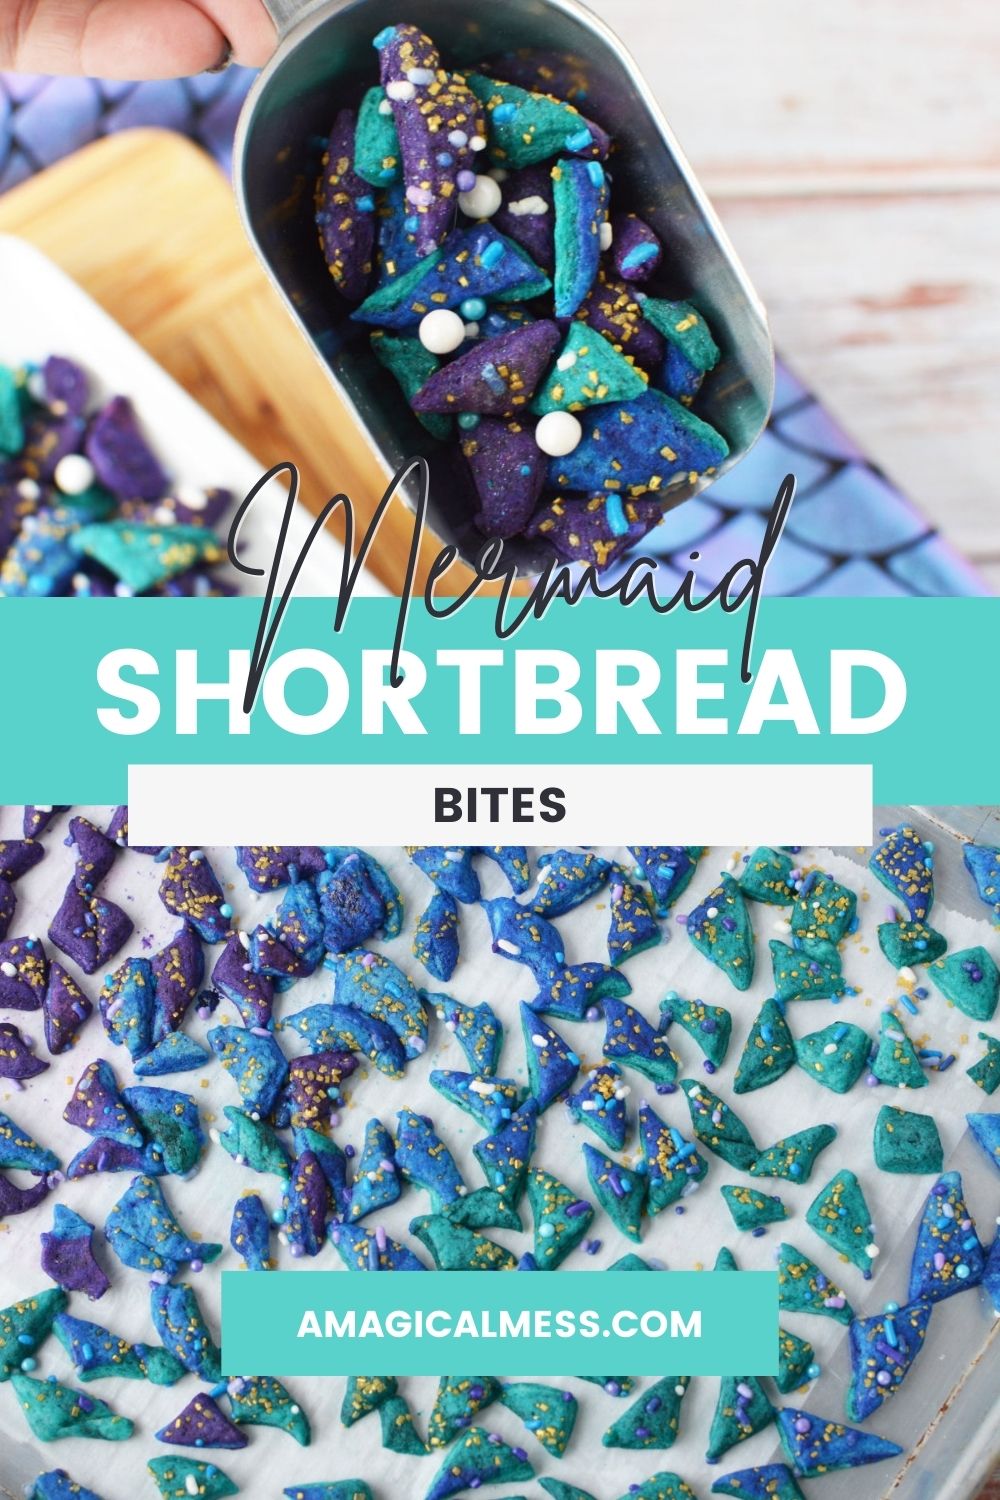 A little shovel full of mermaid shortbread bites and a baking sheet full of them.